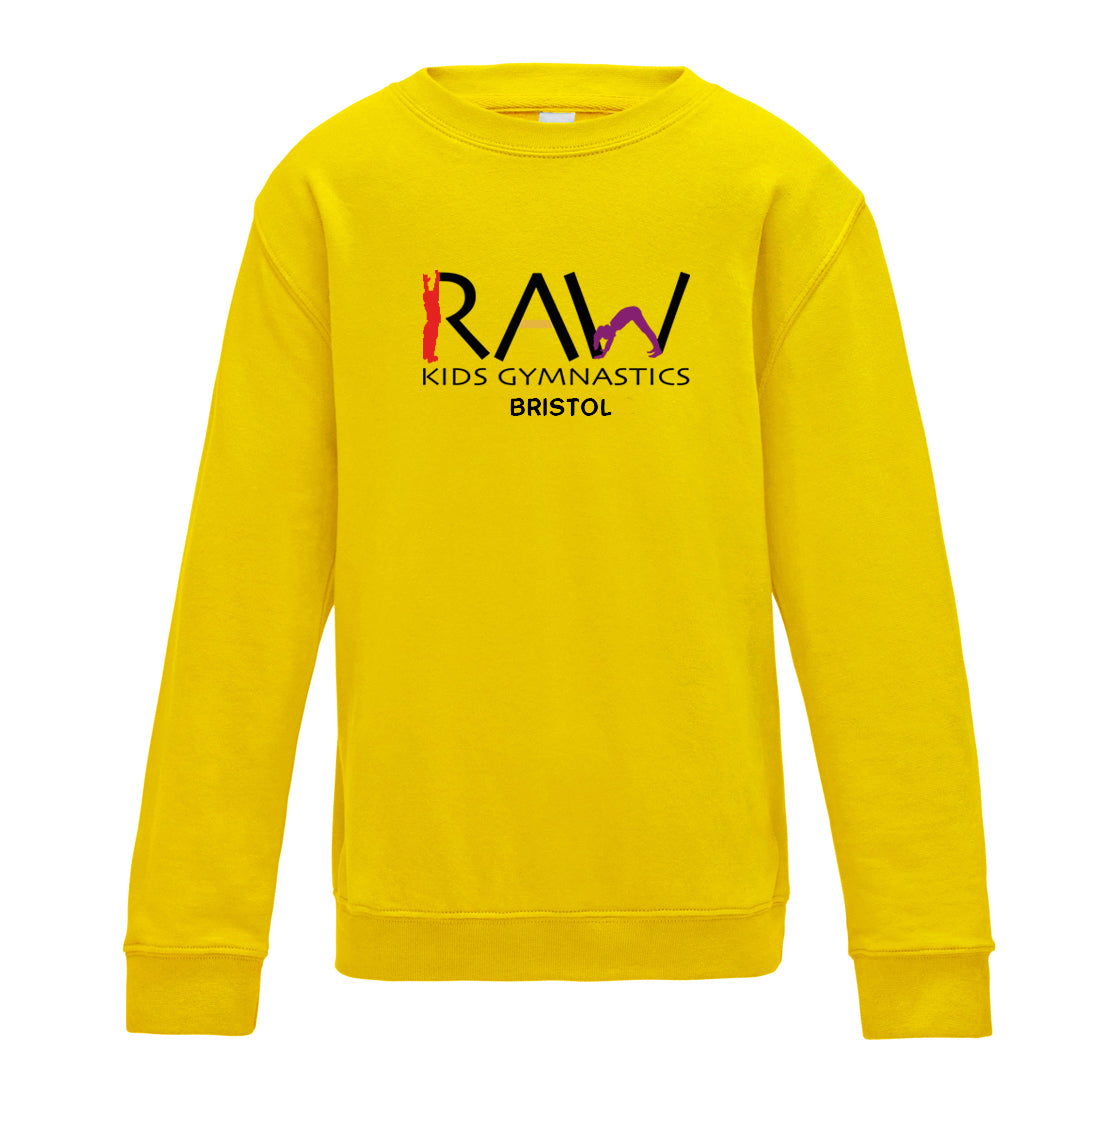 Raw Bristol Sweatshirt